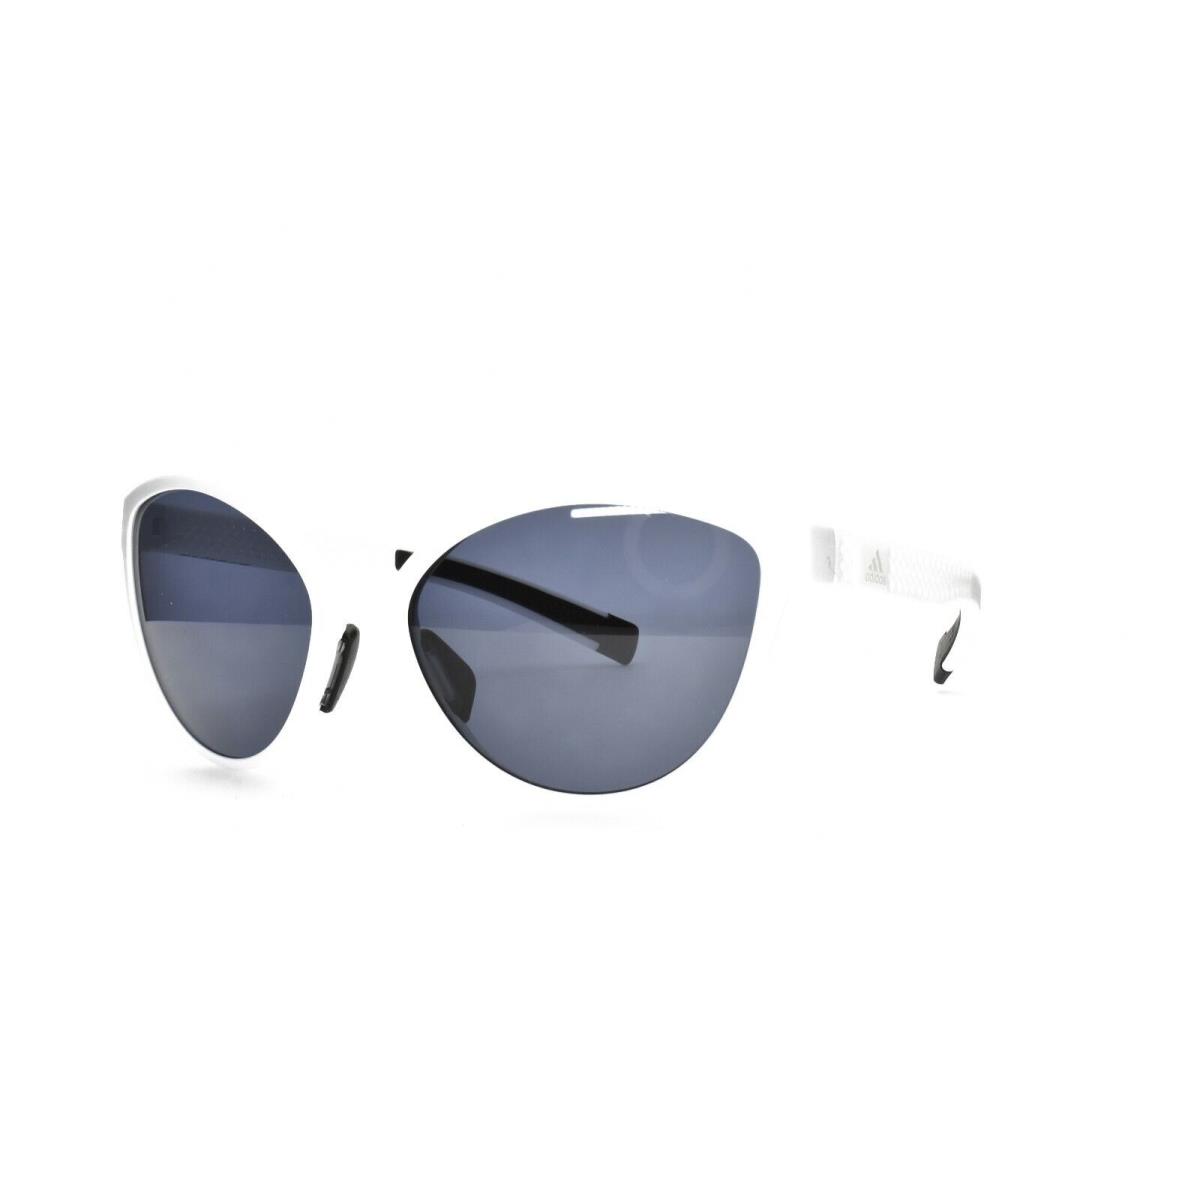 Adidas Sunglasses by Silhouette 3D Print Frame Tempest 37 75 1500 56 X White - Frame: White, Lens: Gray